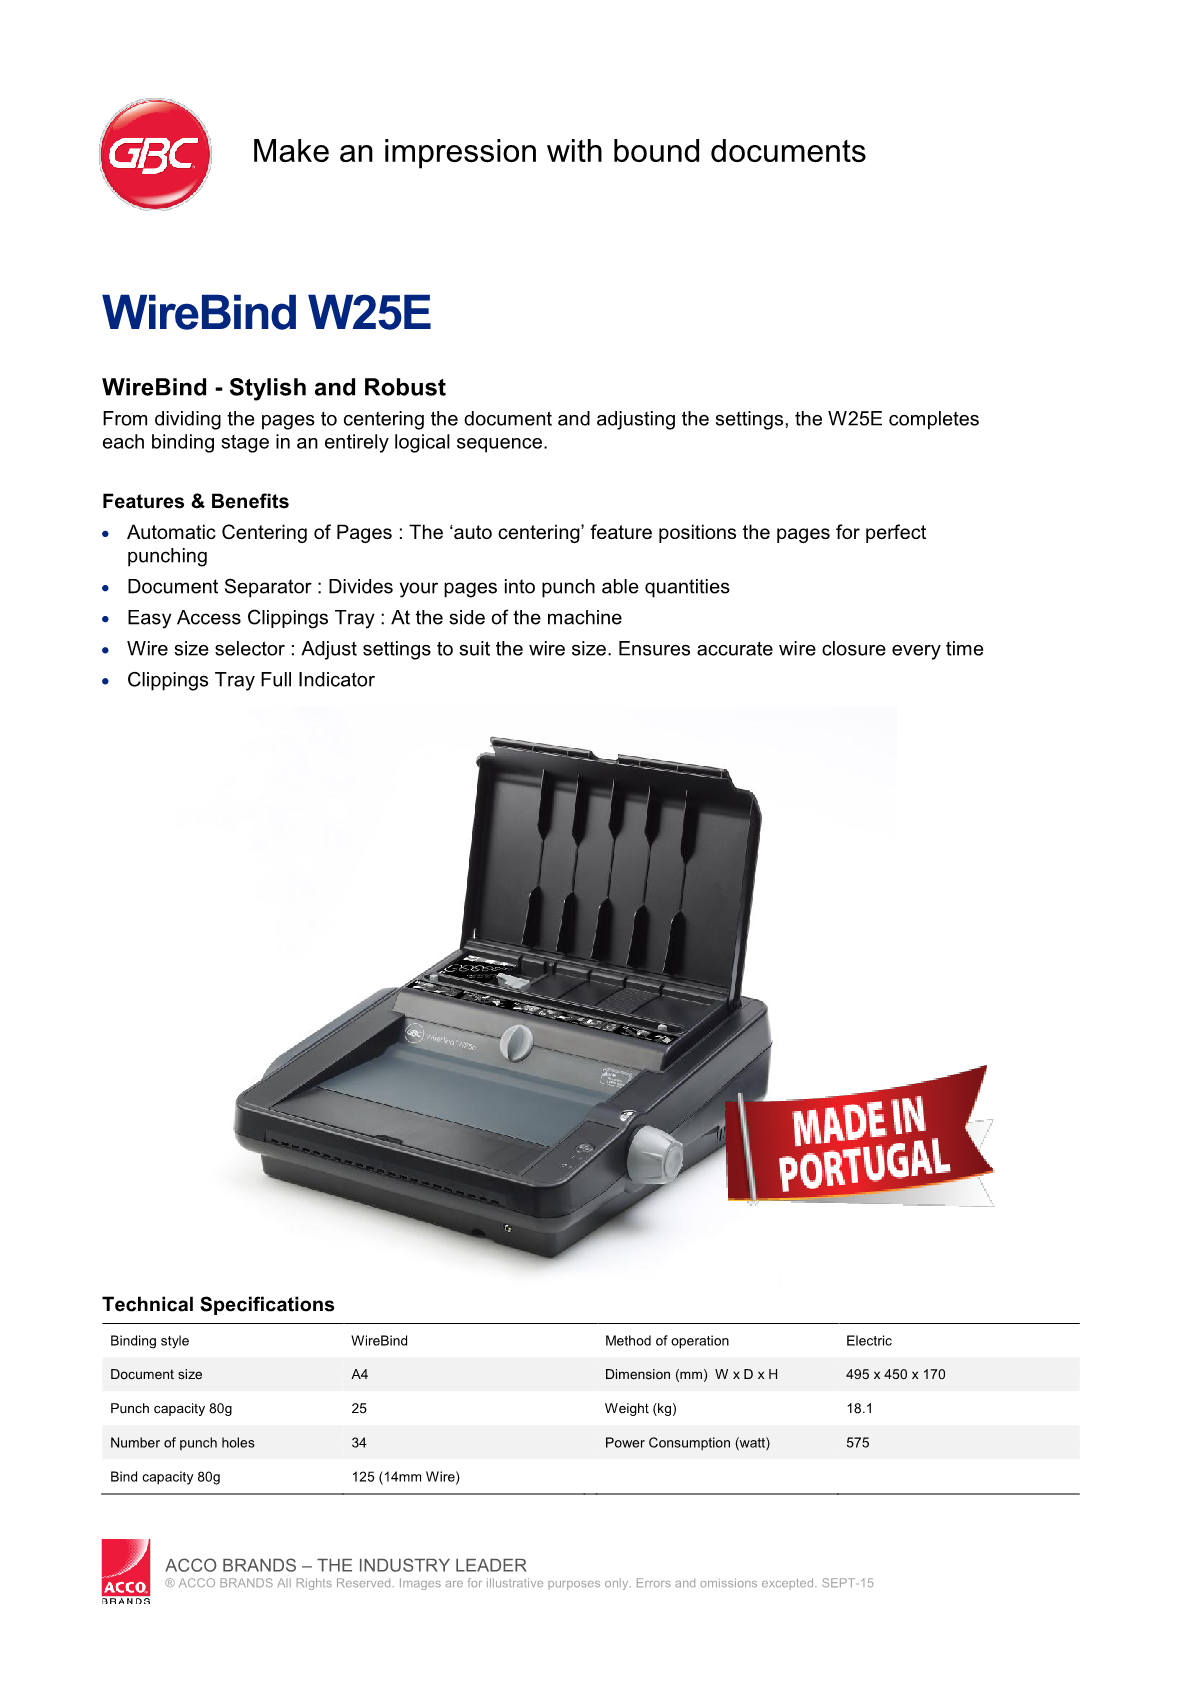 datasheet-wirebind-w25e1.png